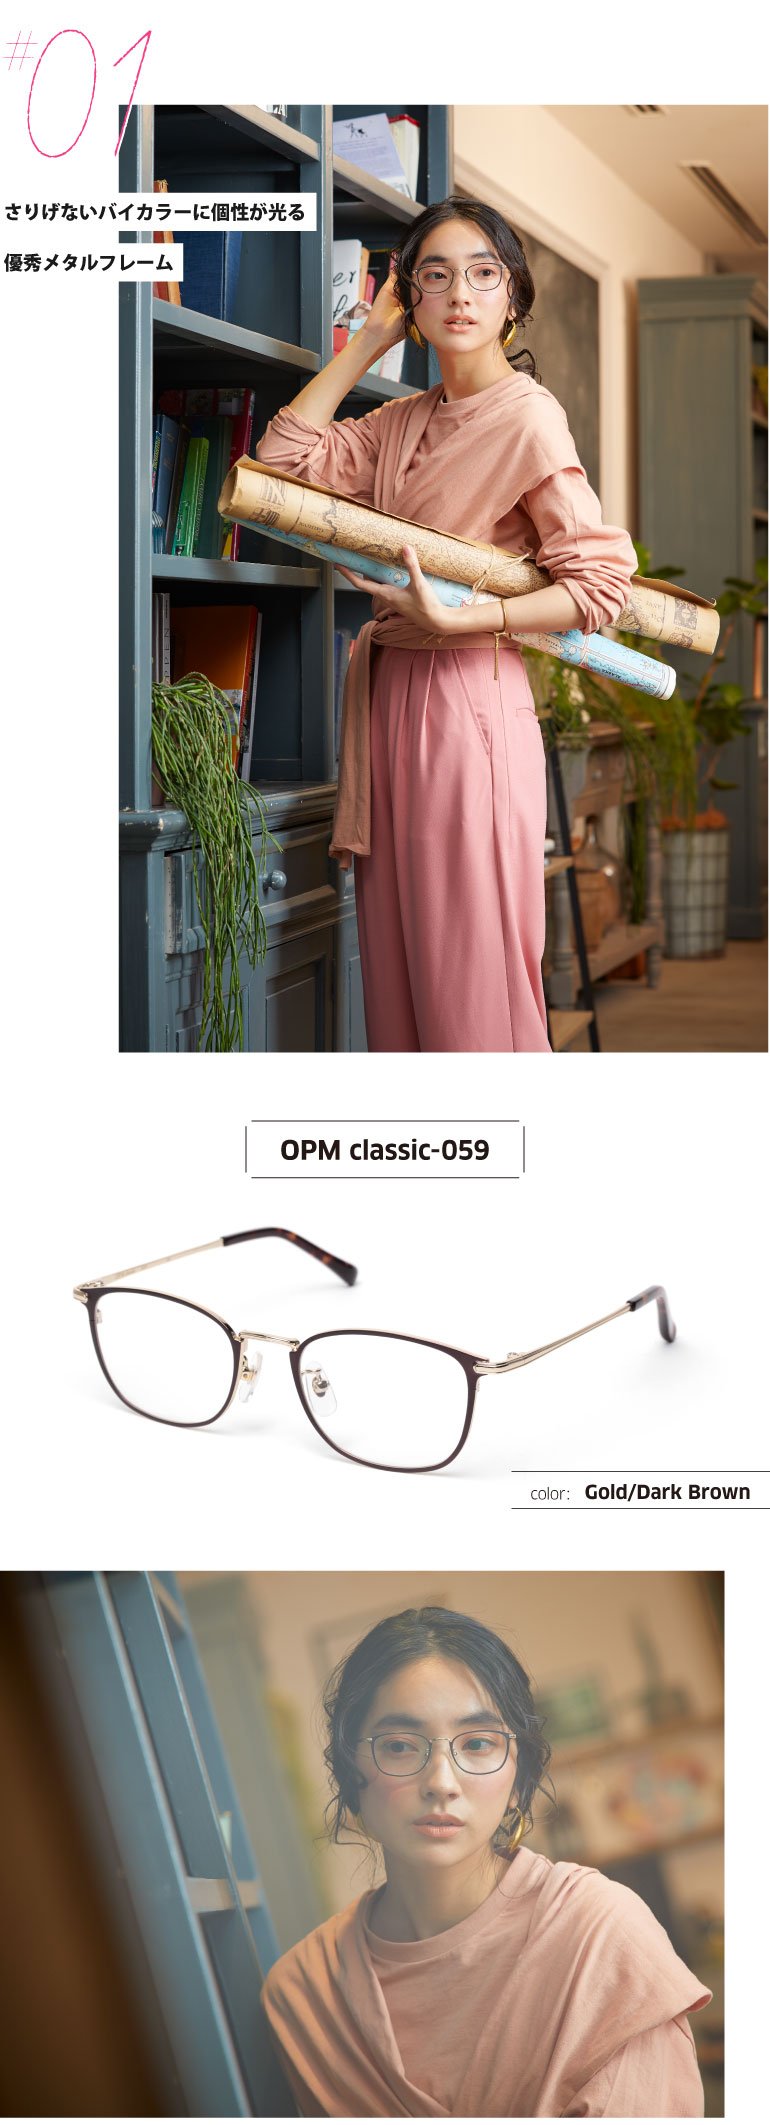 OPM classic-059